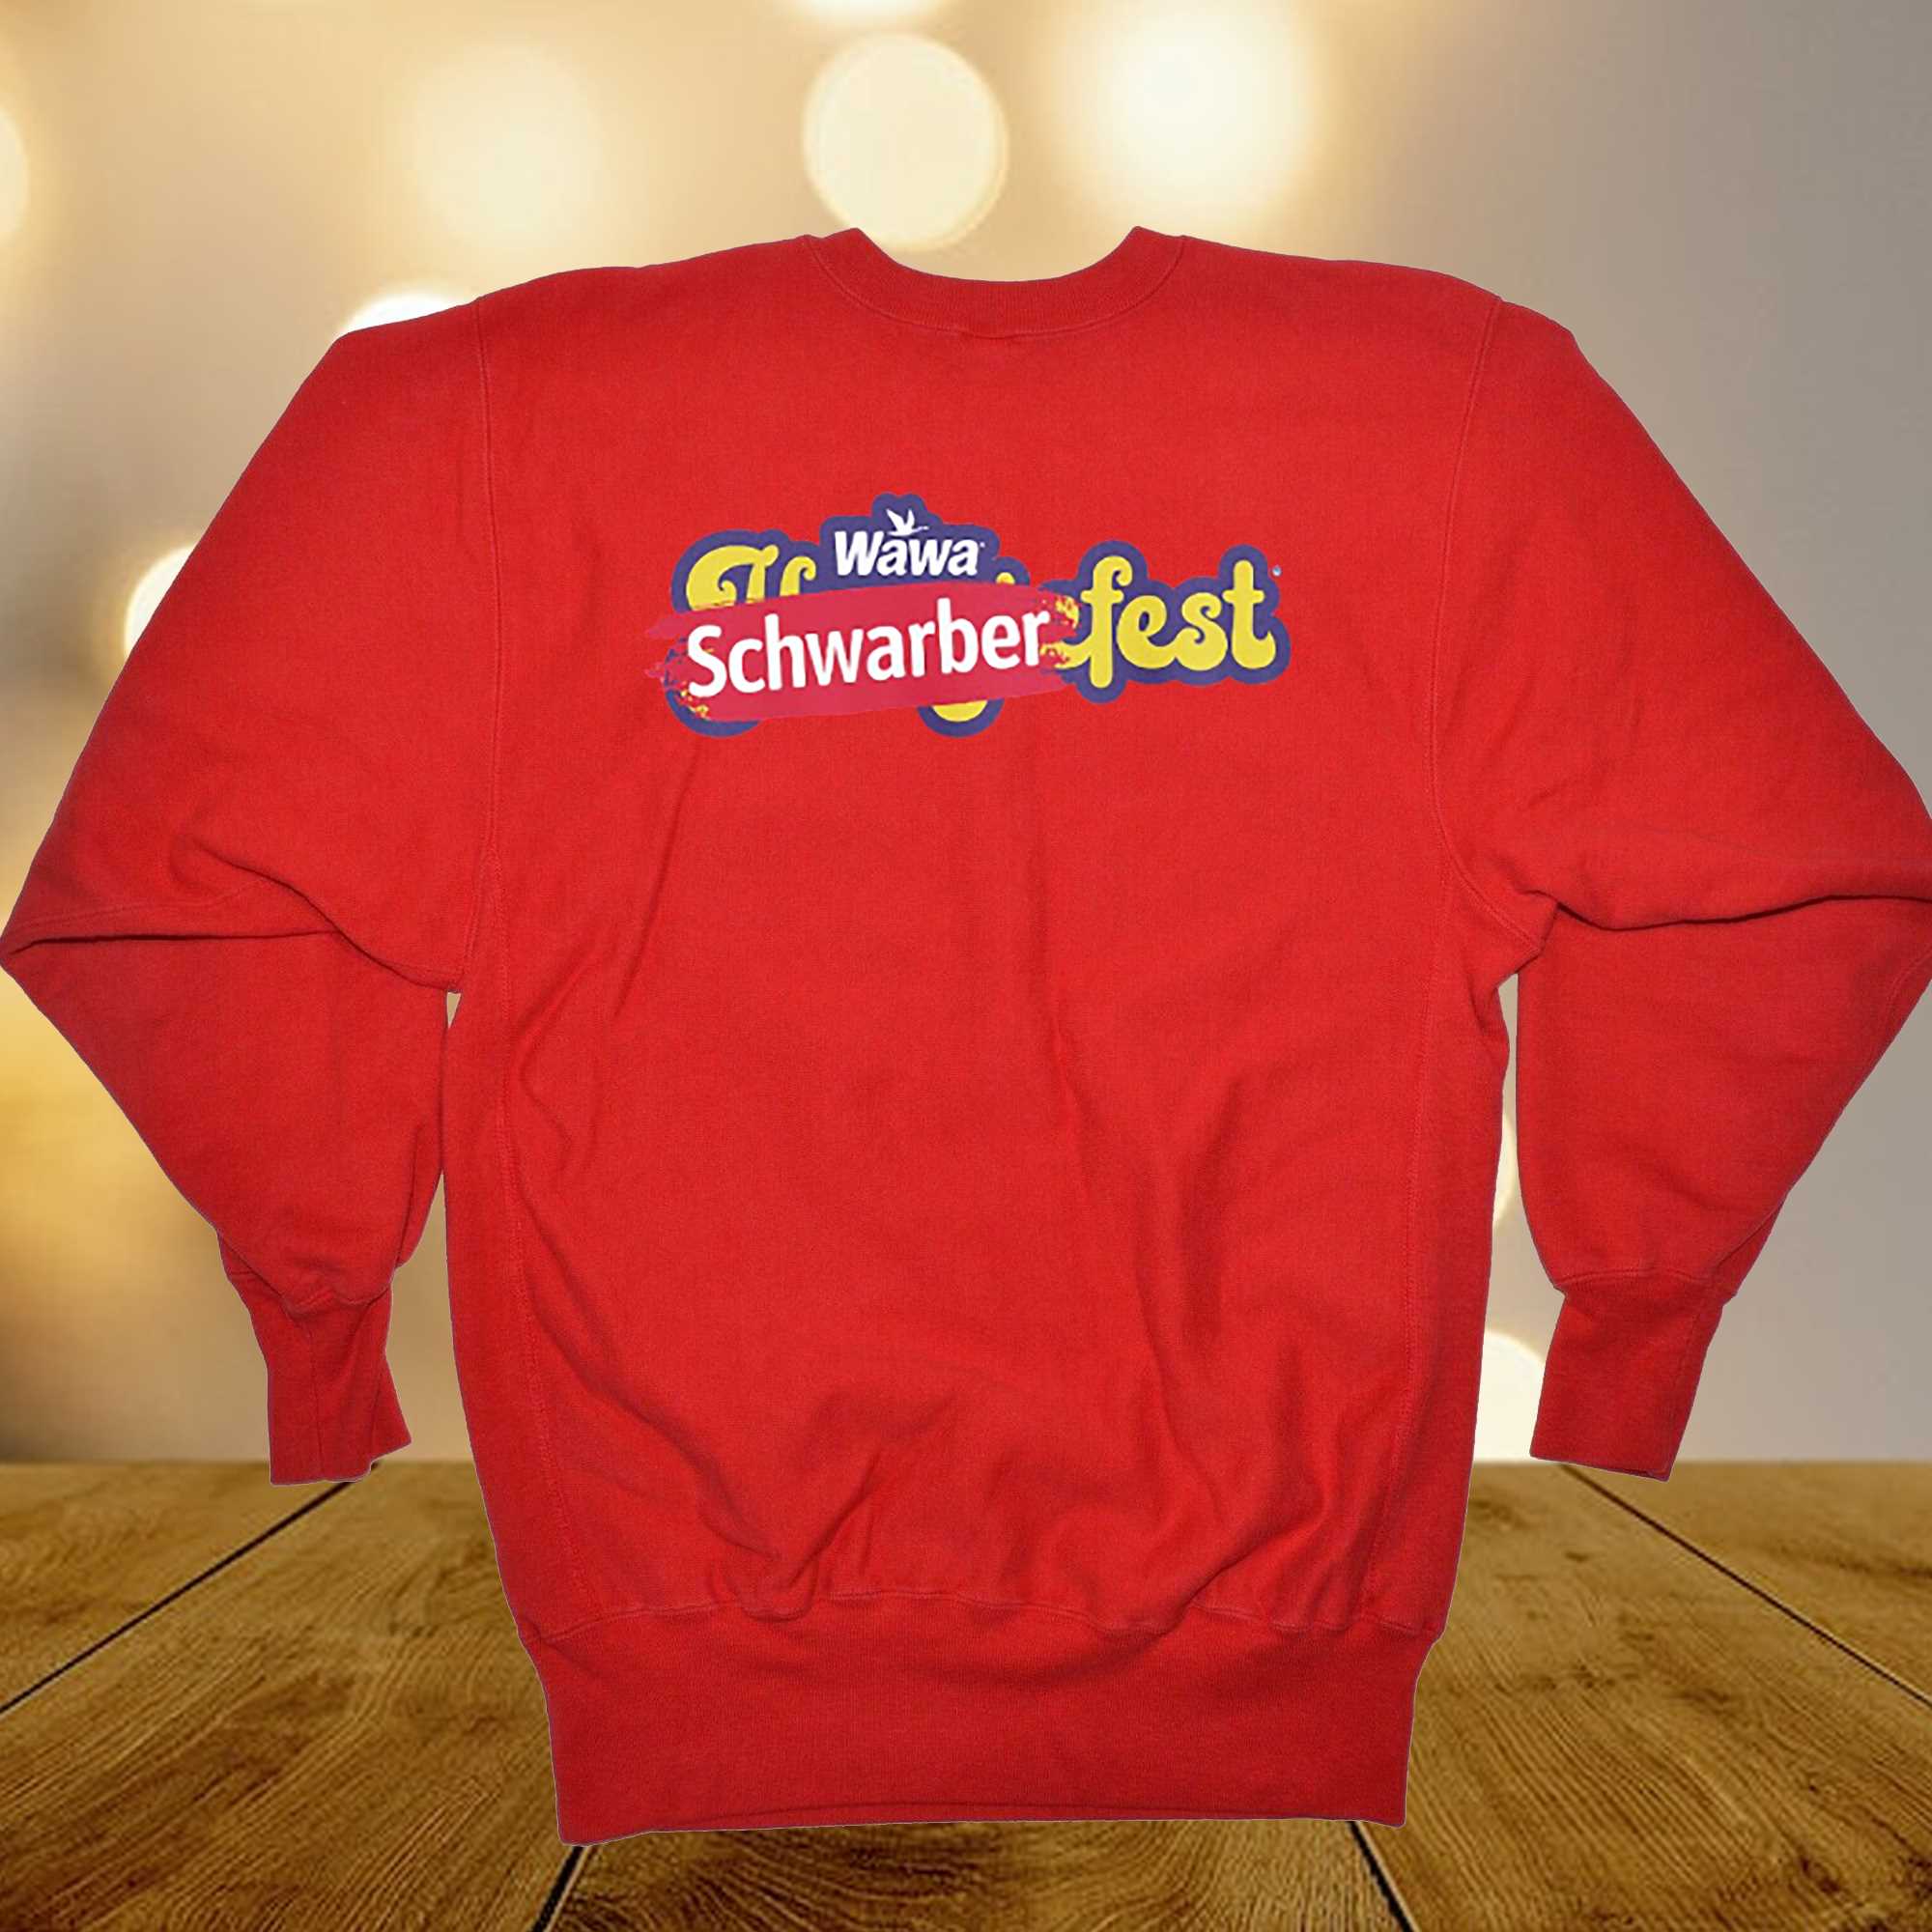 Kyle Schwarber Wawa Schwarberfest T-shirt - Shibtee Clothing